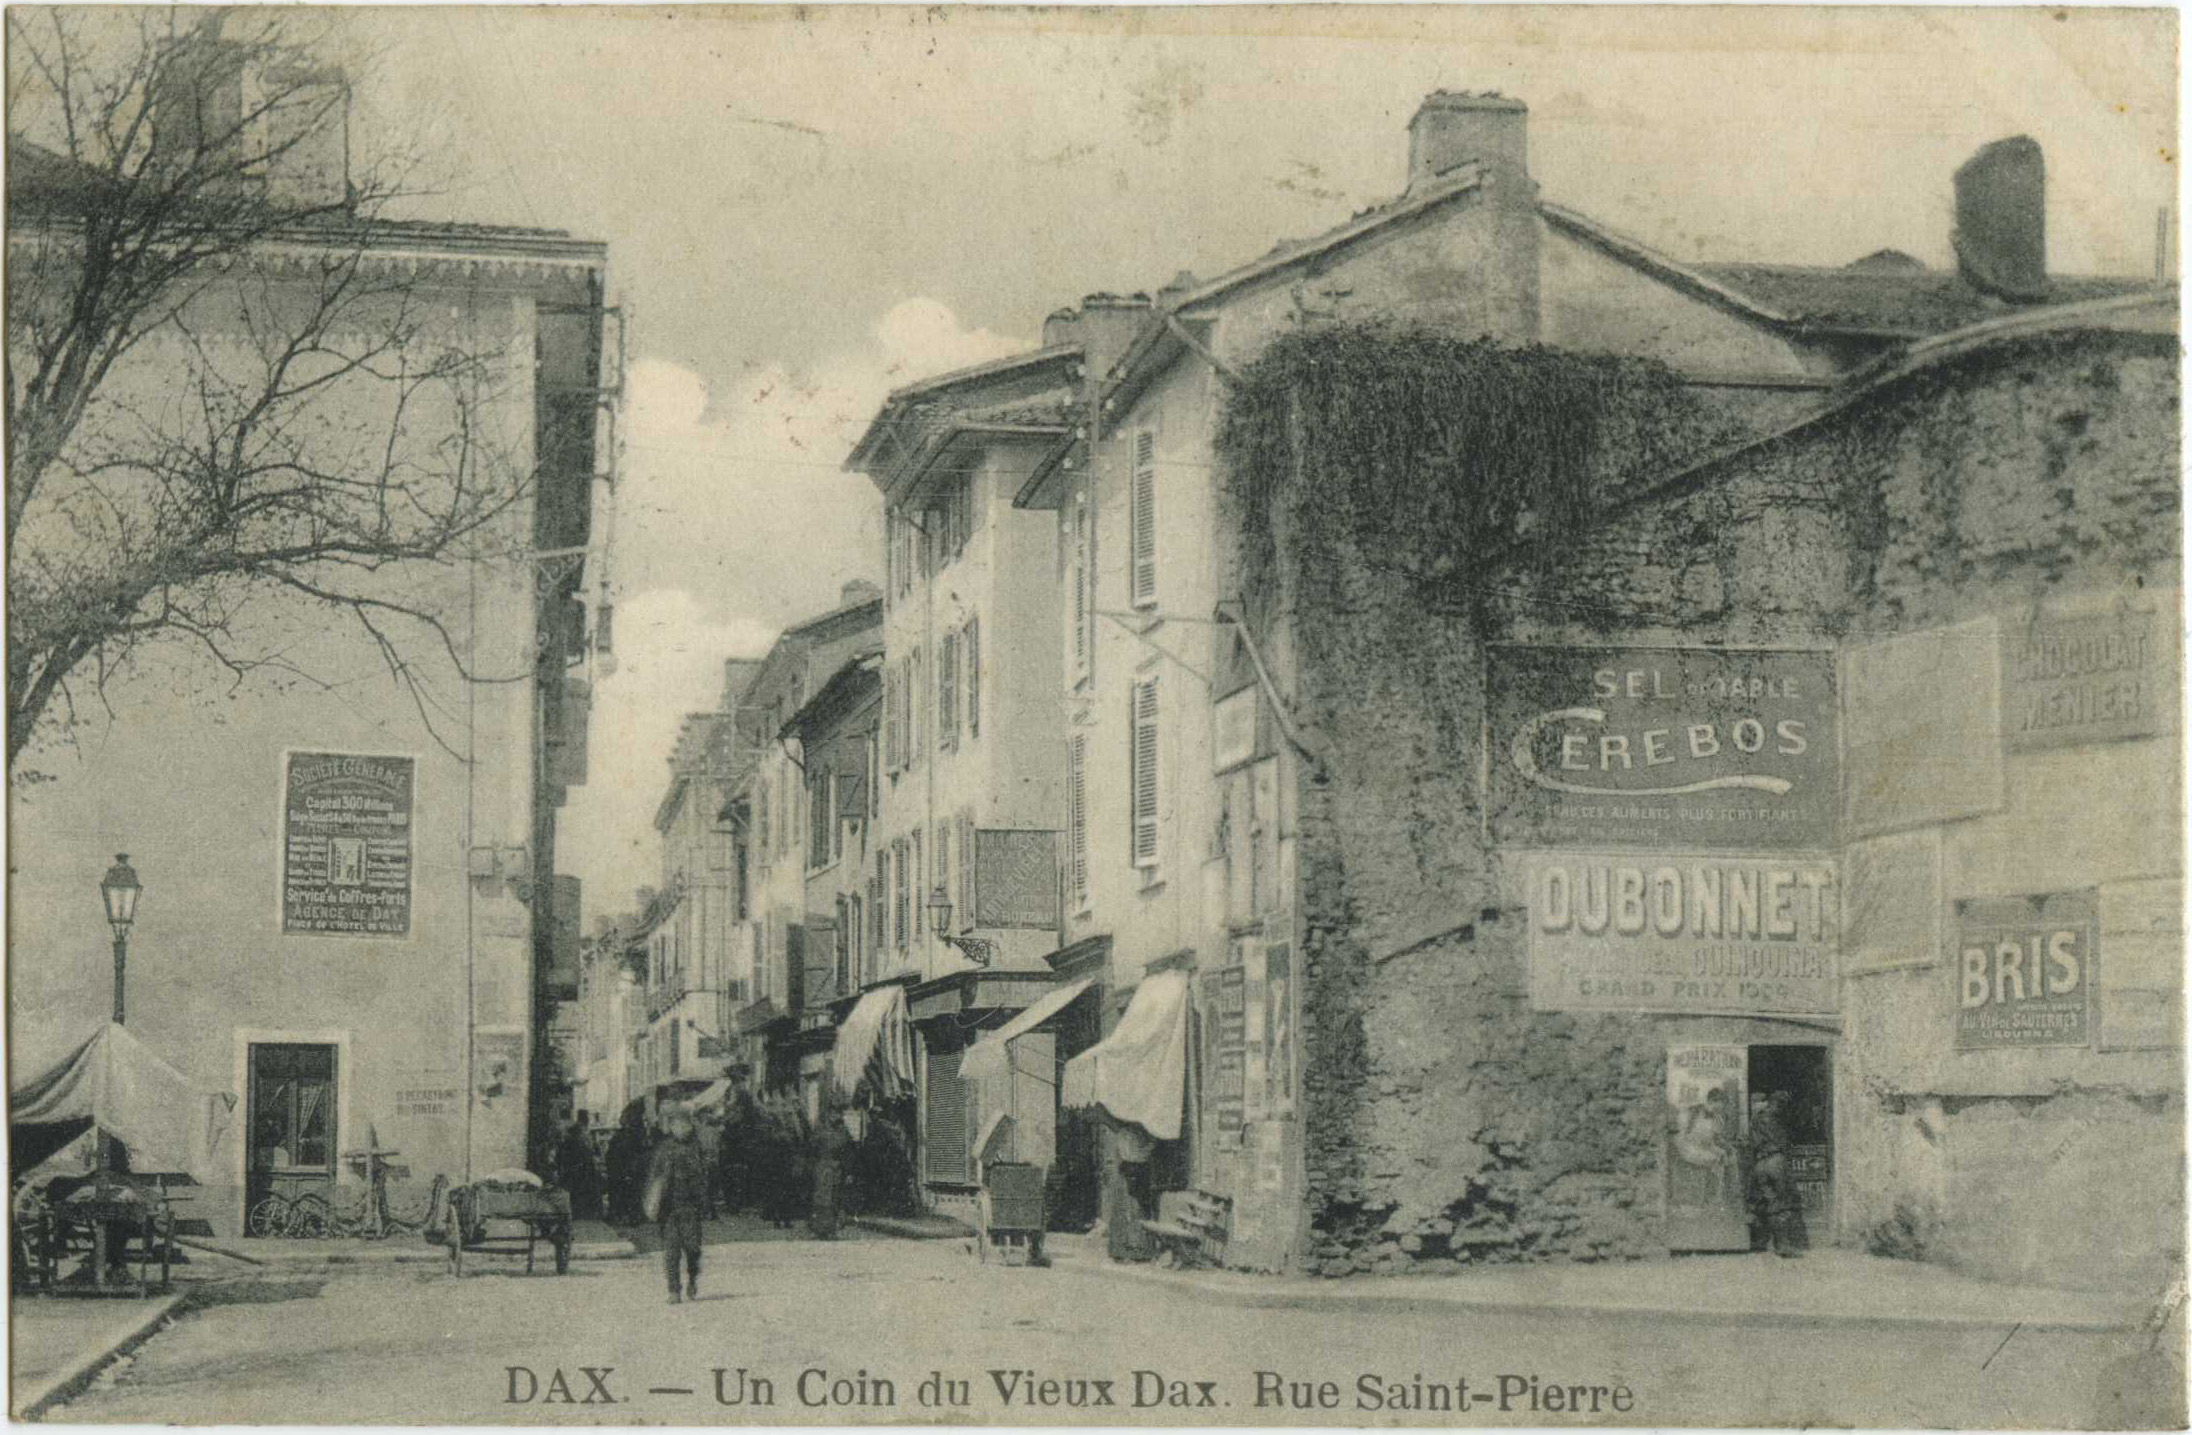 Dax - Un Coin du Vieux Dax. Rue Saint-Pierre